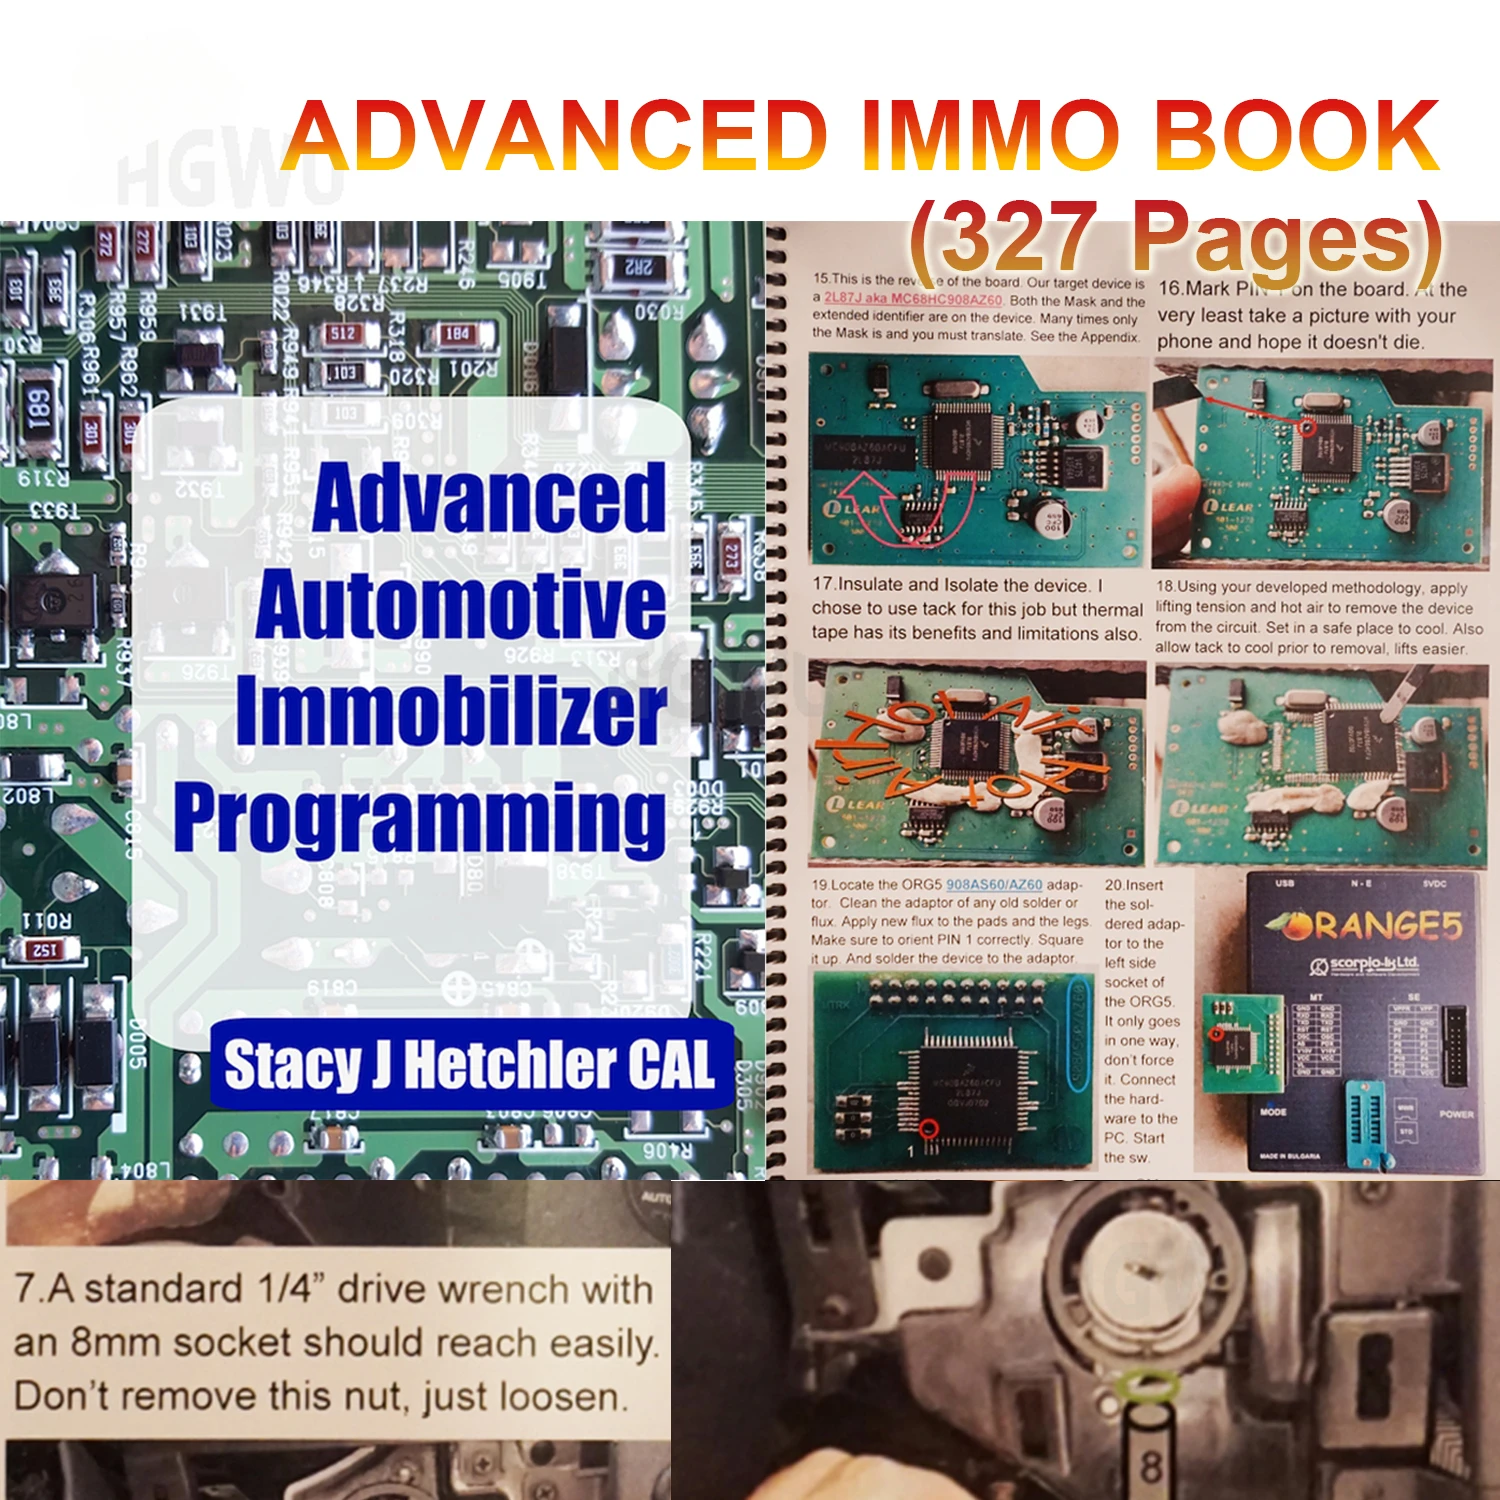 

Advanced IMMO BOOK Automotive Immobilizer Programming Ebook 327 Pages PDF Check/Diagnose/Repair Car Control Box ECU Teaching